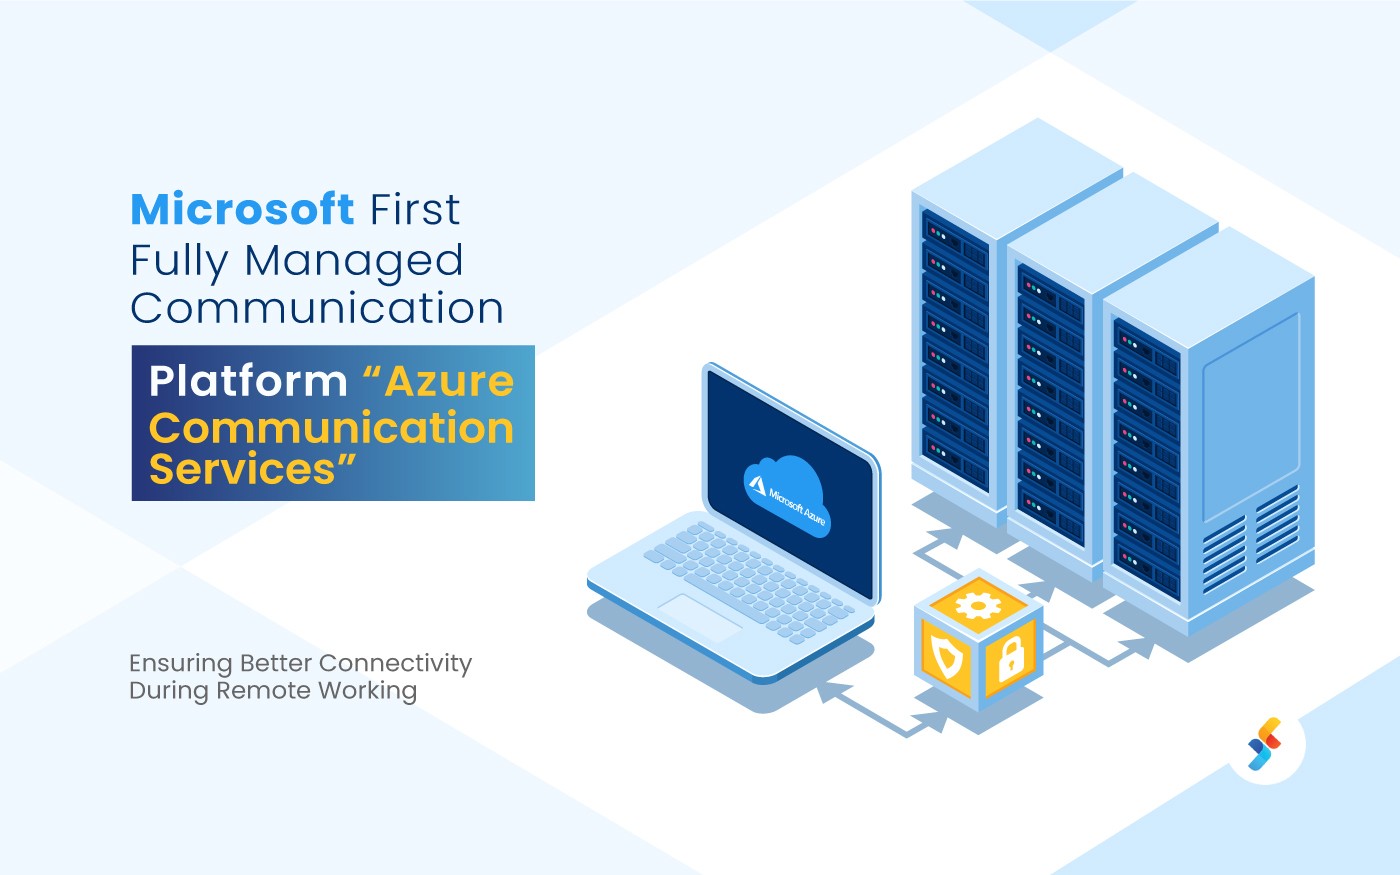 Microsoft First Fully Managed Communication Platform “Azure Communication Services”